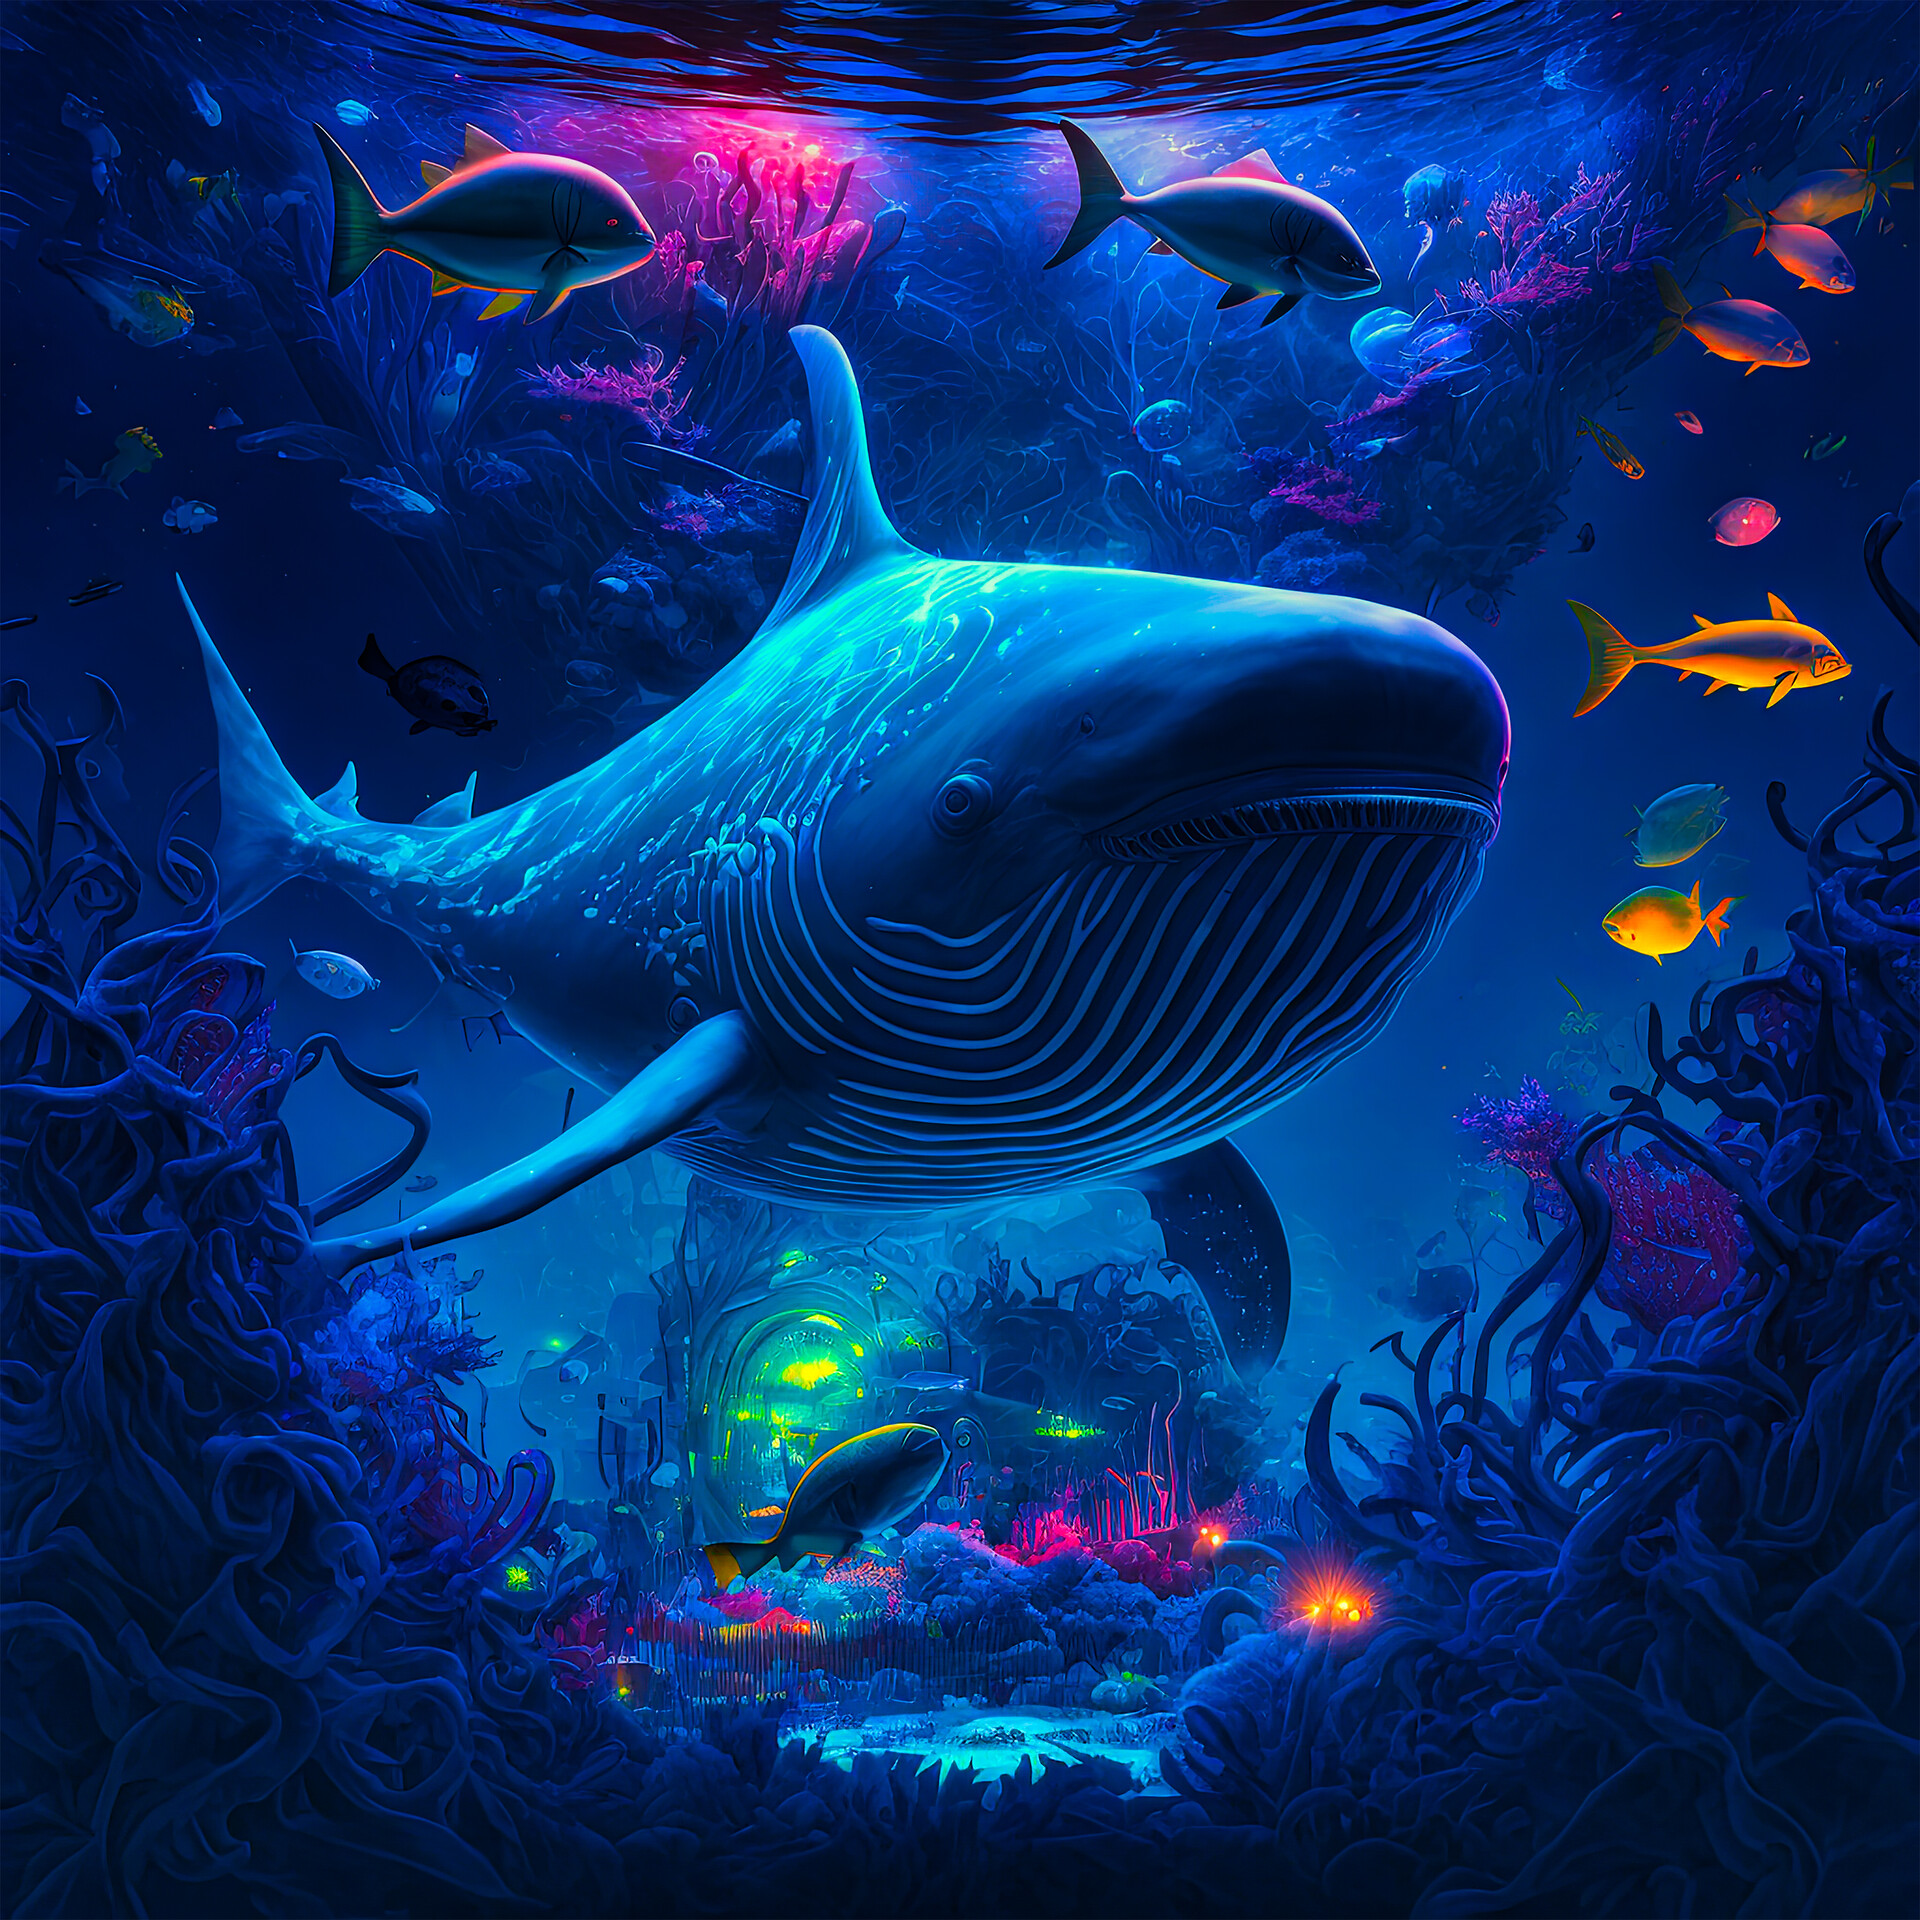 ArtStation - Underwater Dream